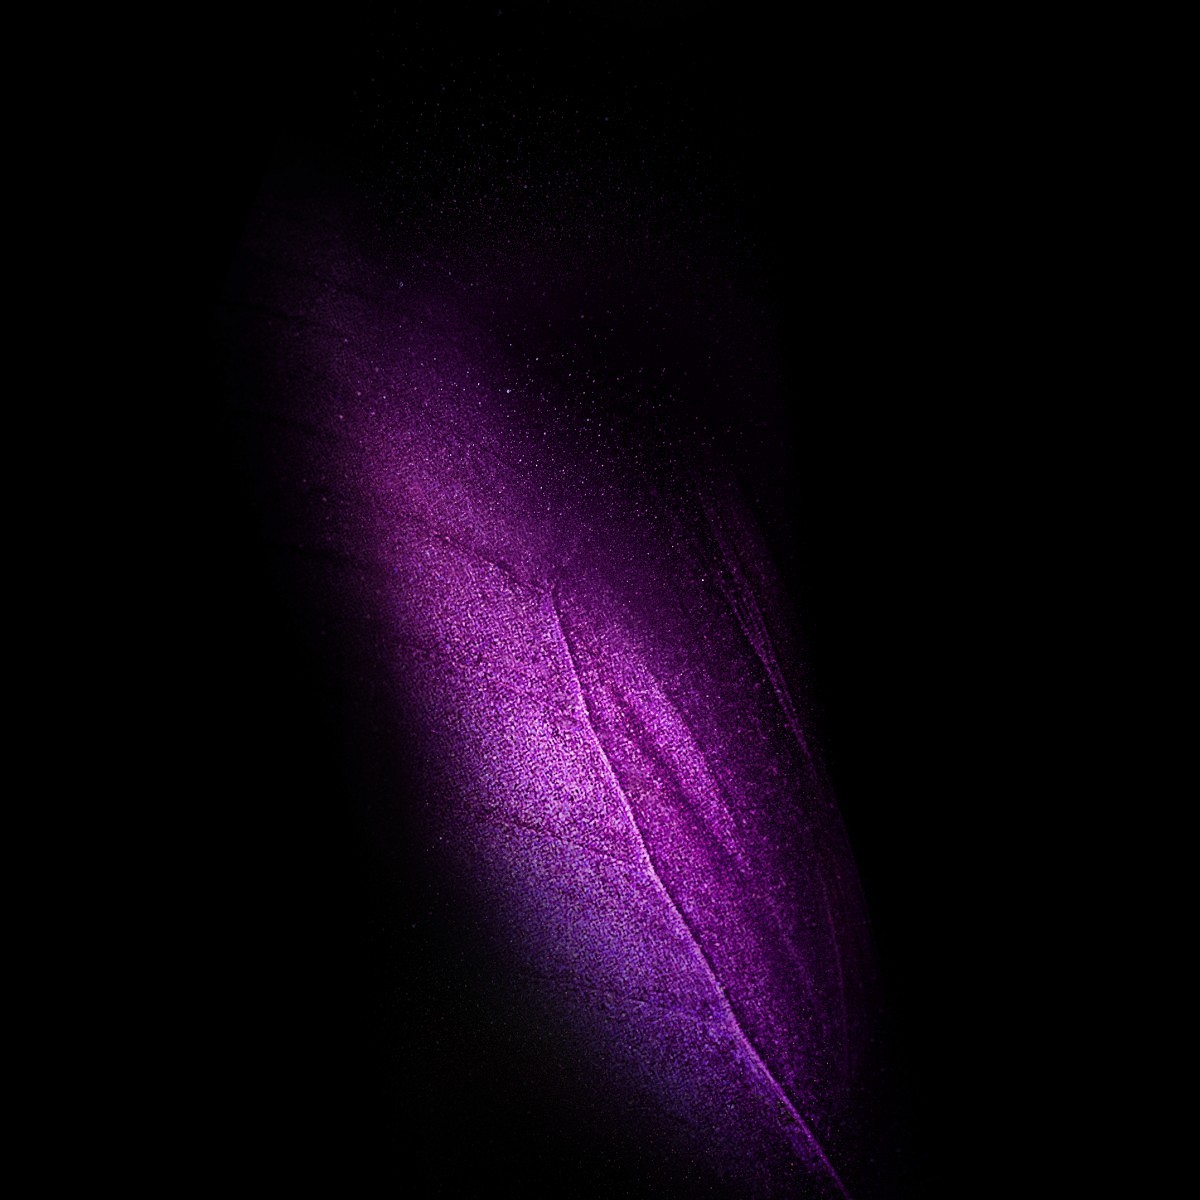 samsung default wallpaper,violet,purple,black,darkness,light